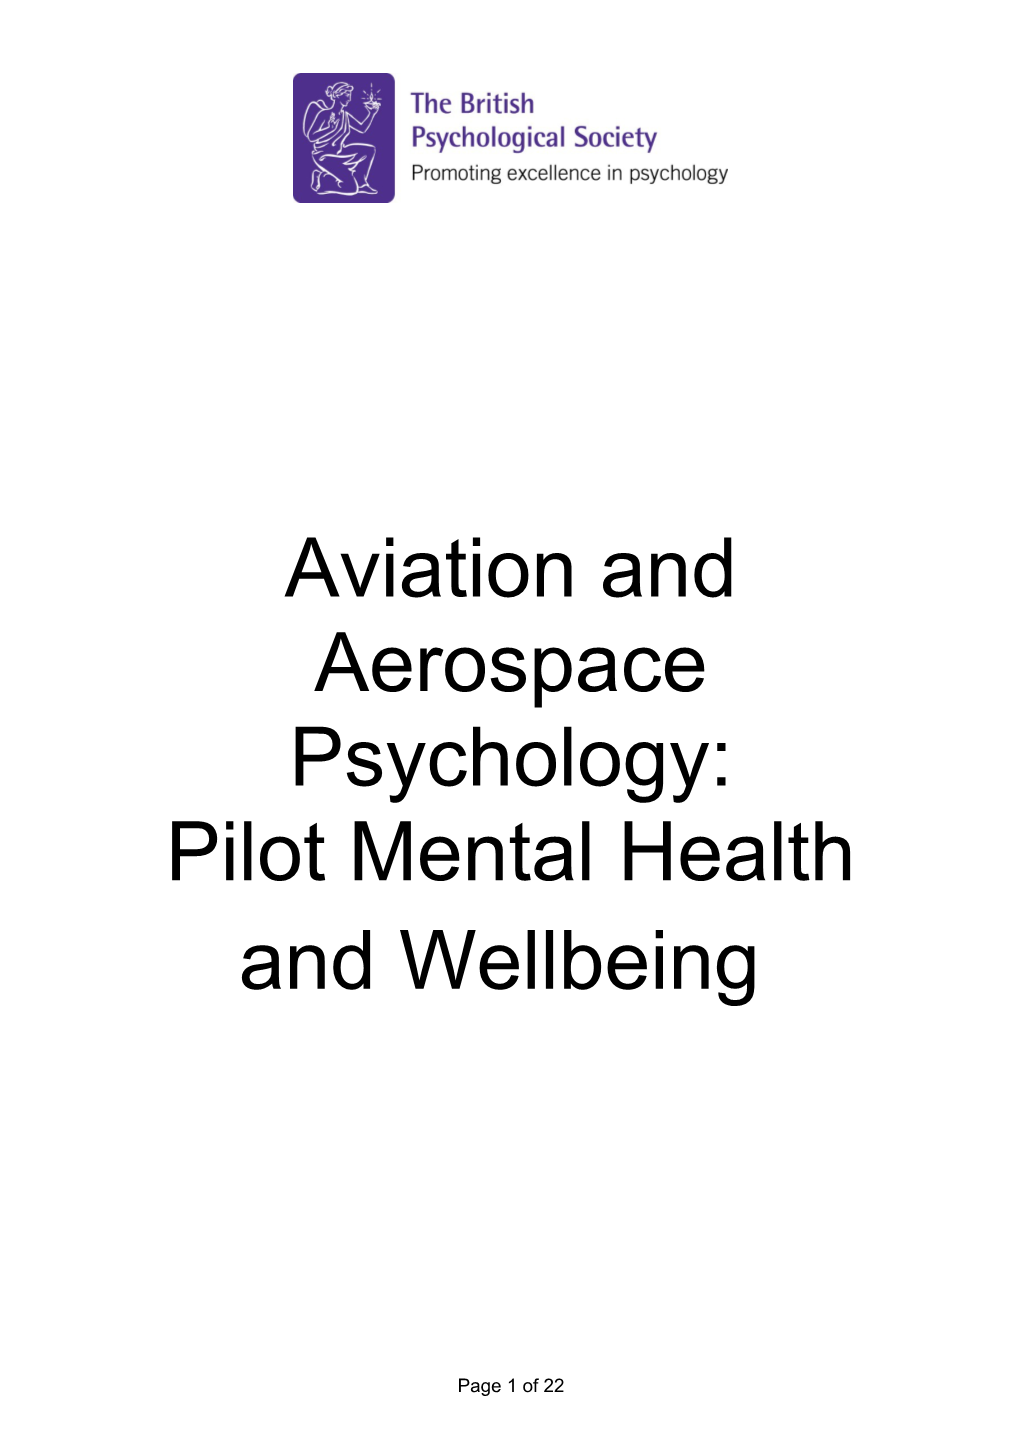 Aviation and Aerospace Psychology